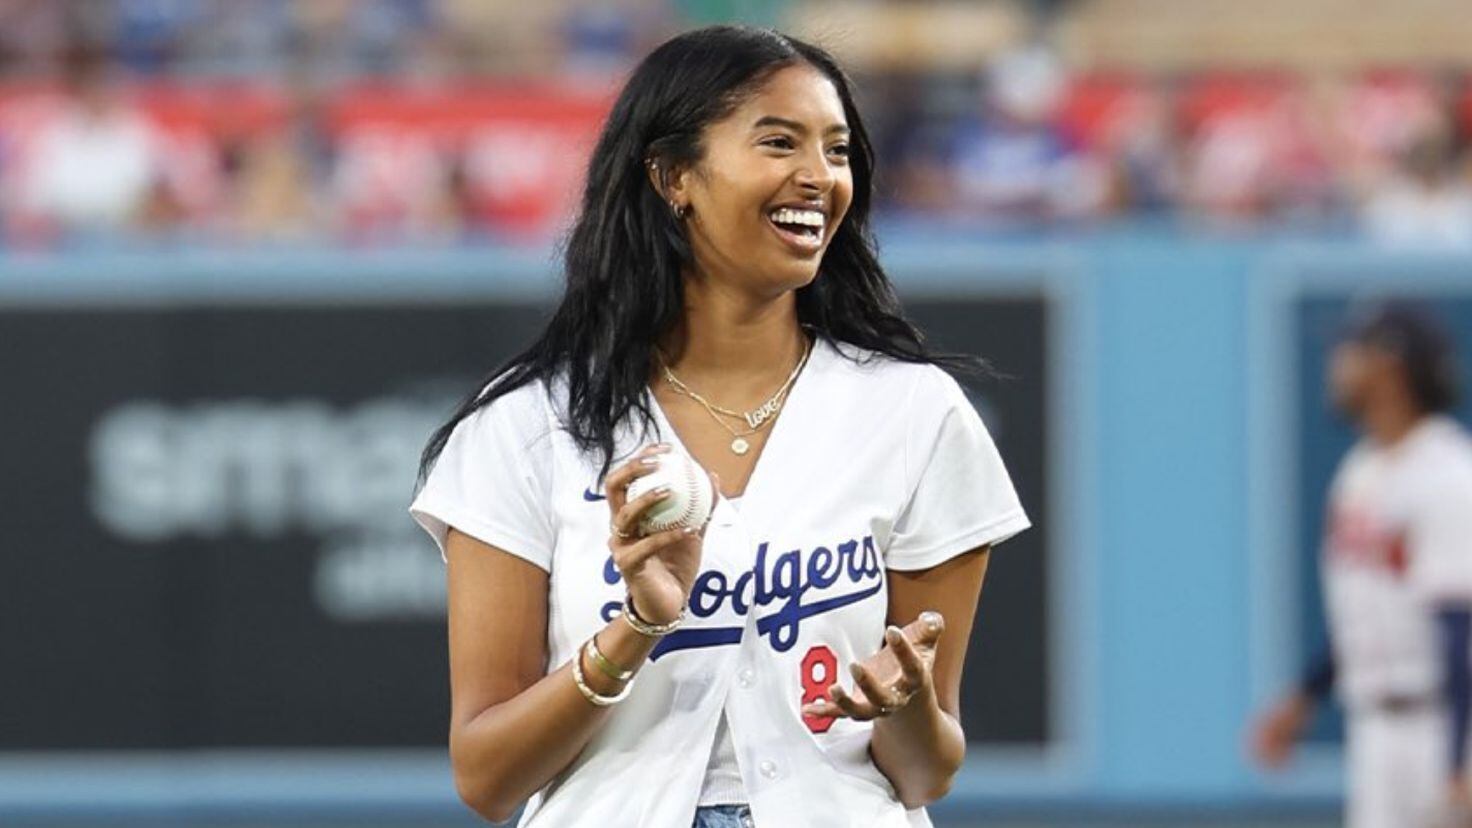 Kobe's daughter Natalia tosses first pitch at Dodger Stadium